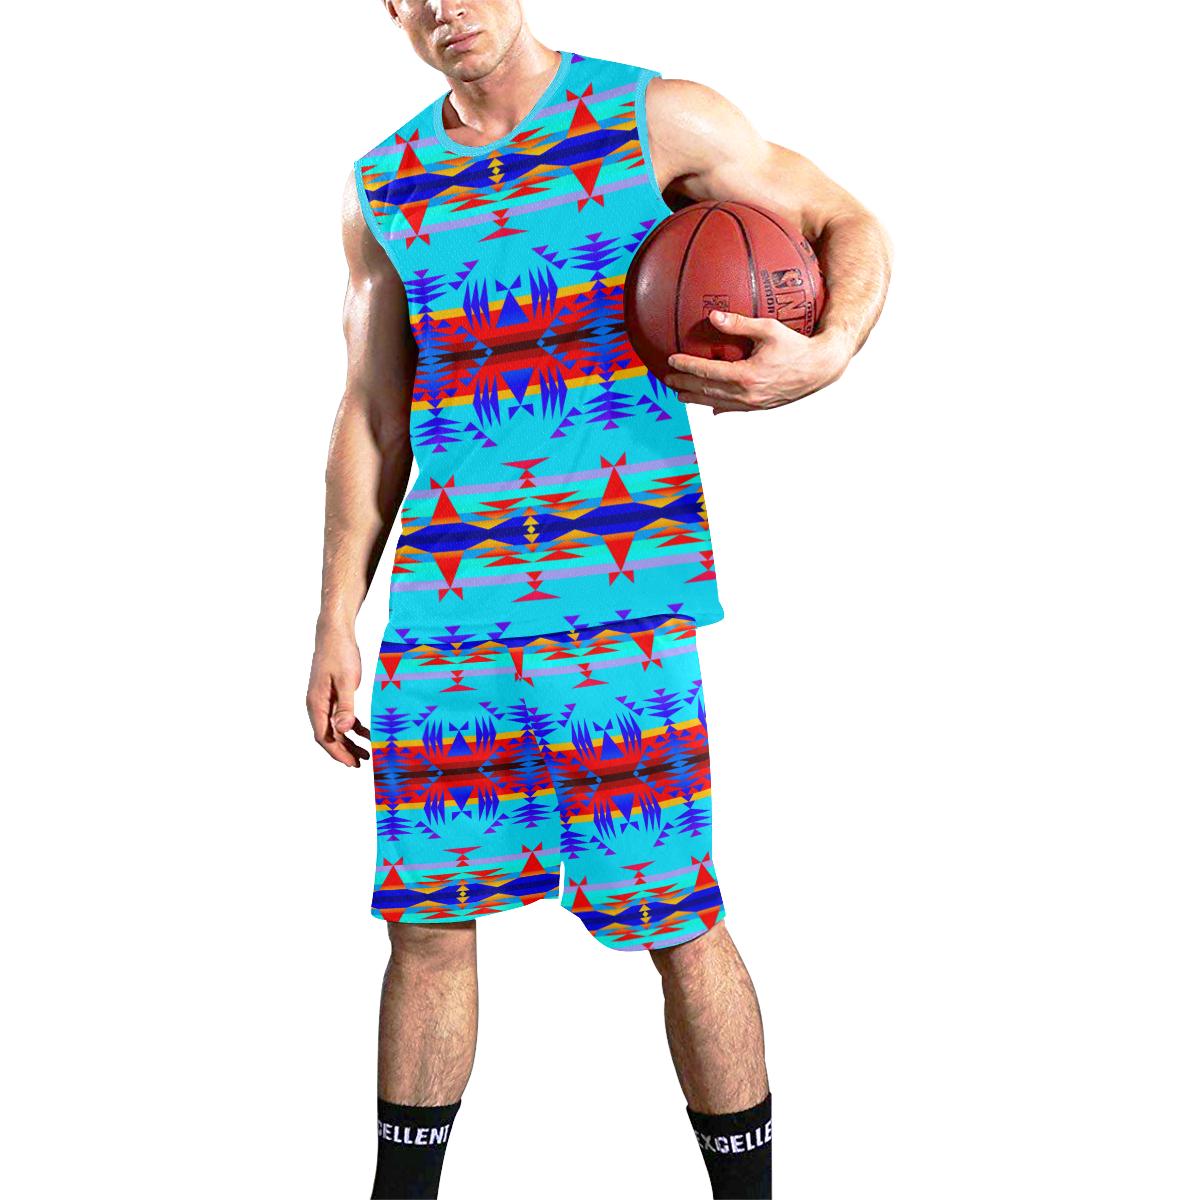 Between the Mountains Blue All Over Print Basketball Uniform Basketball Uniform e-joyer 